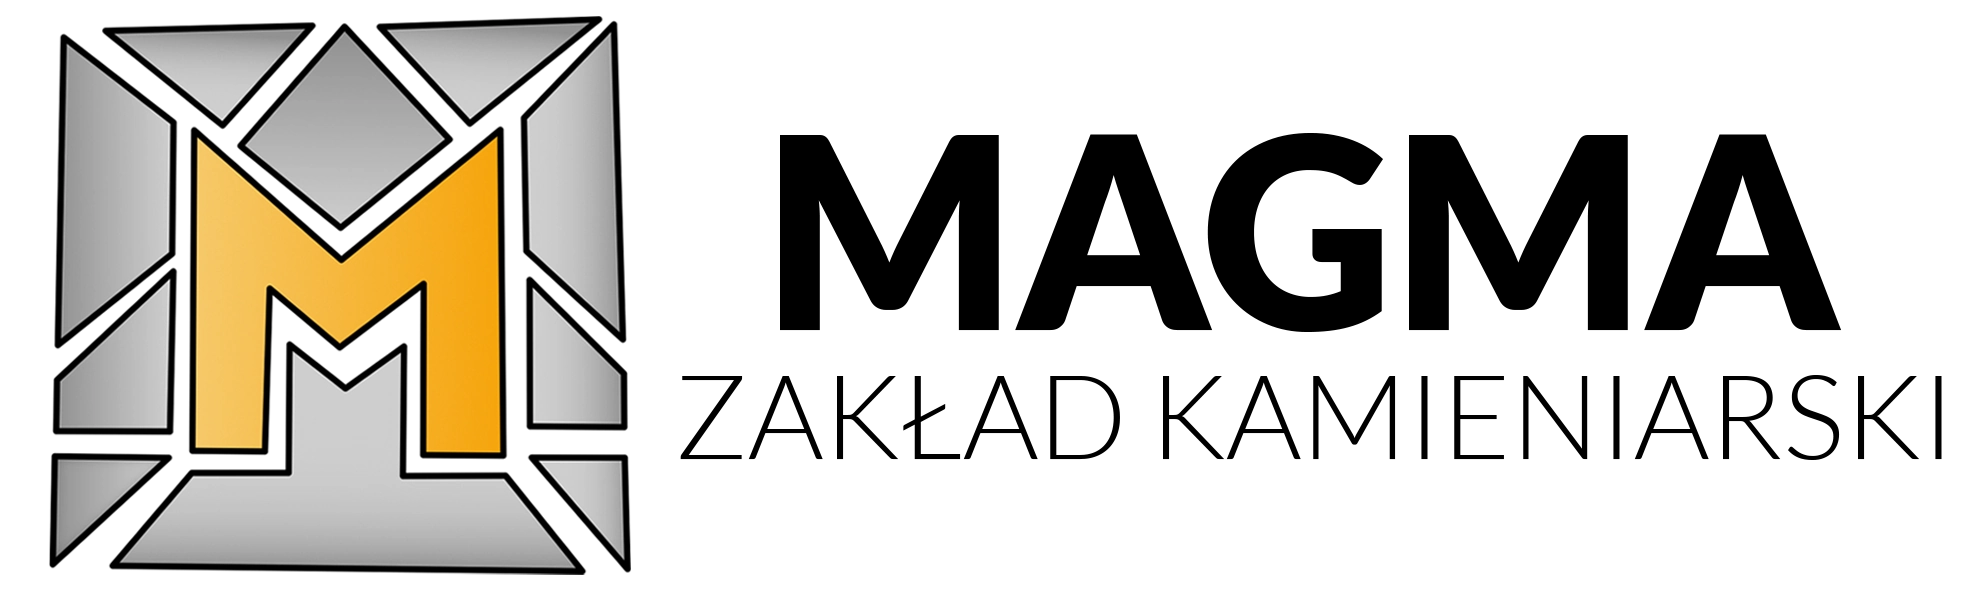 Logo MAGMA